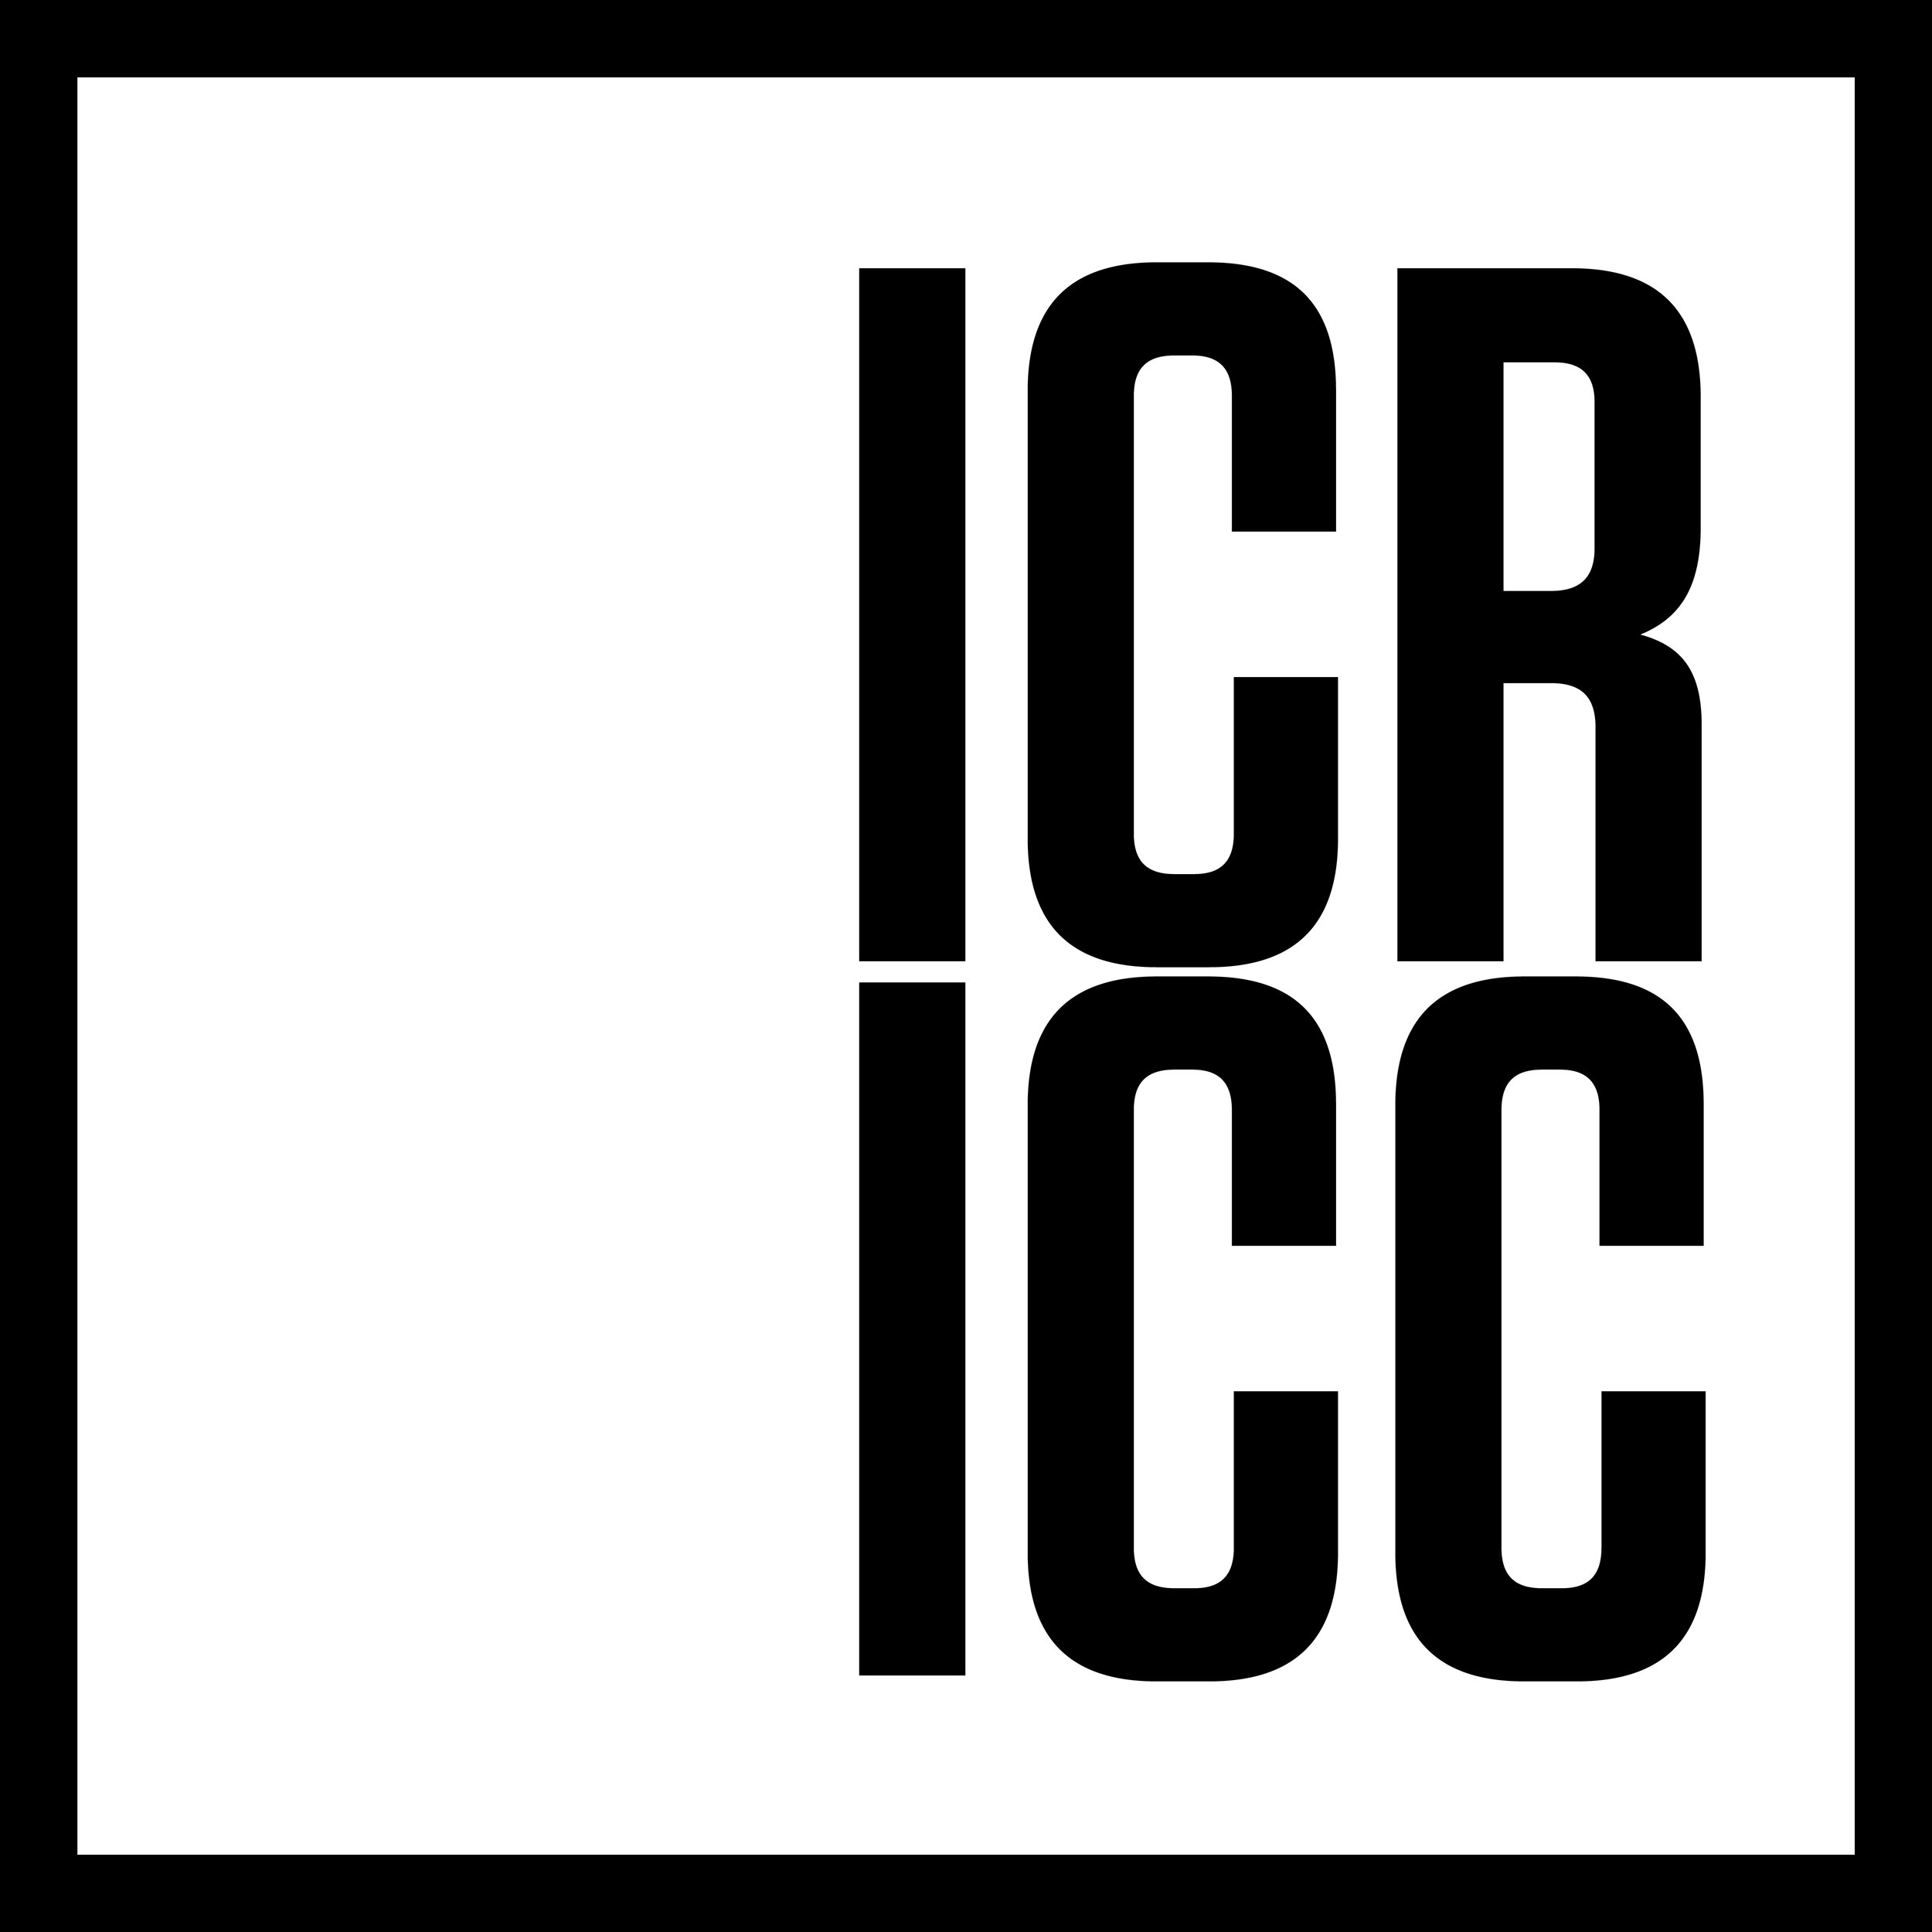 ICR - ICC